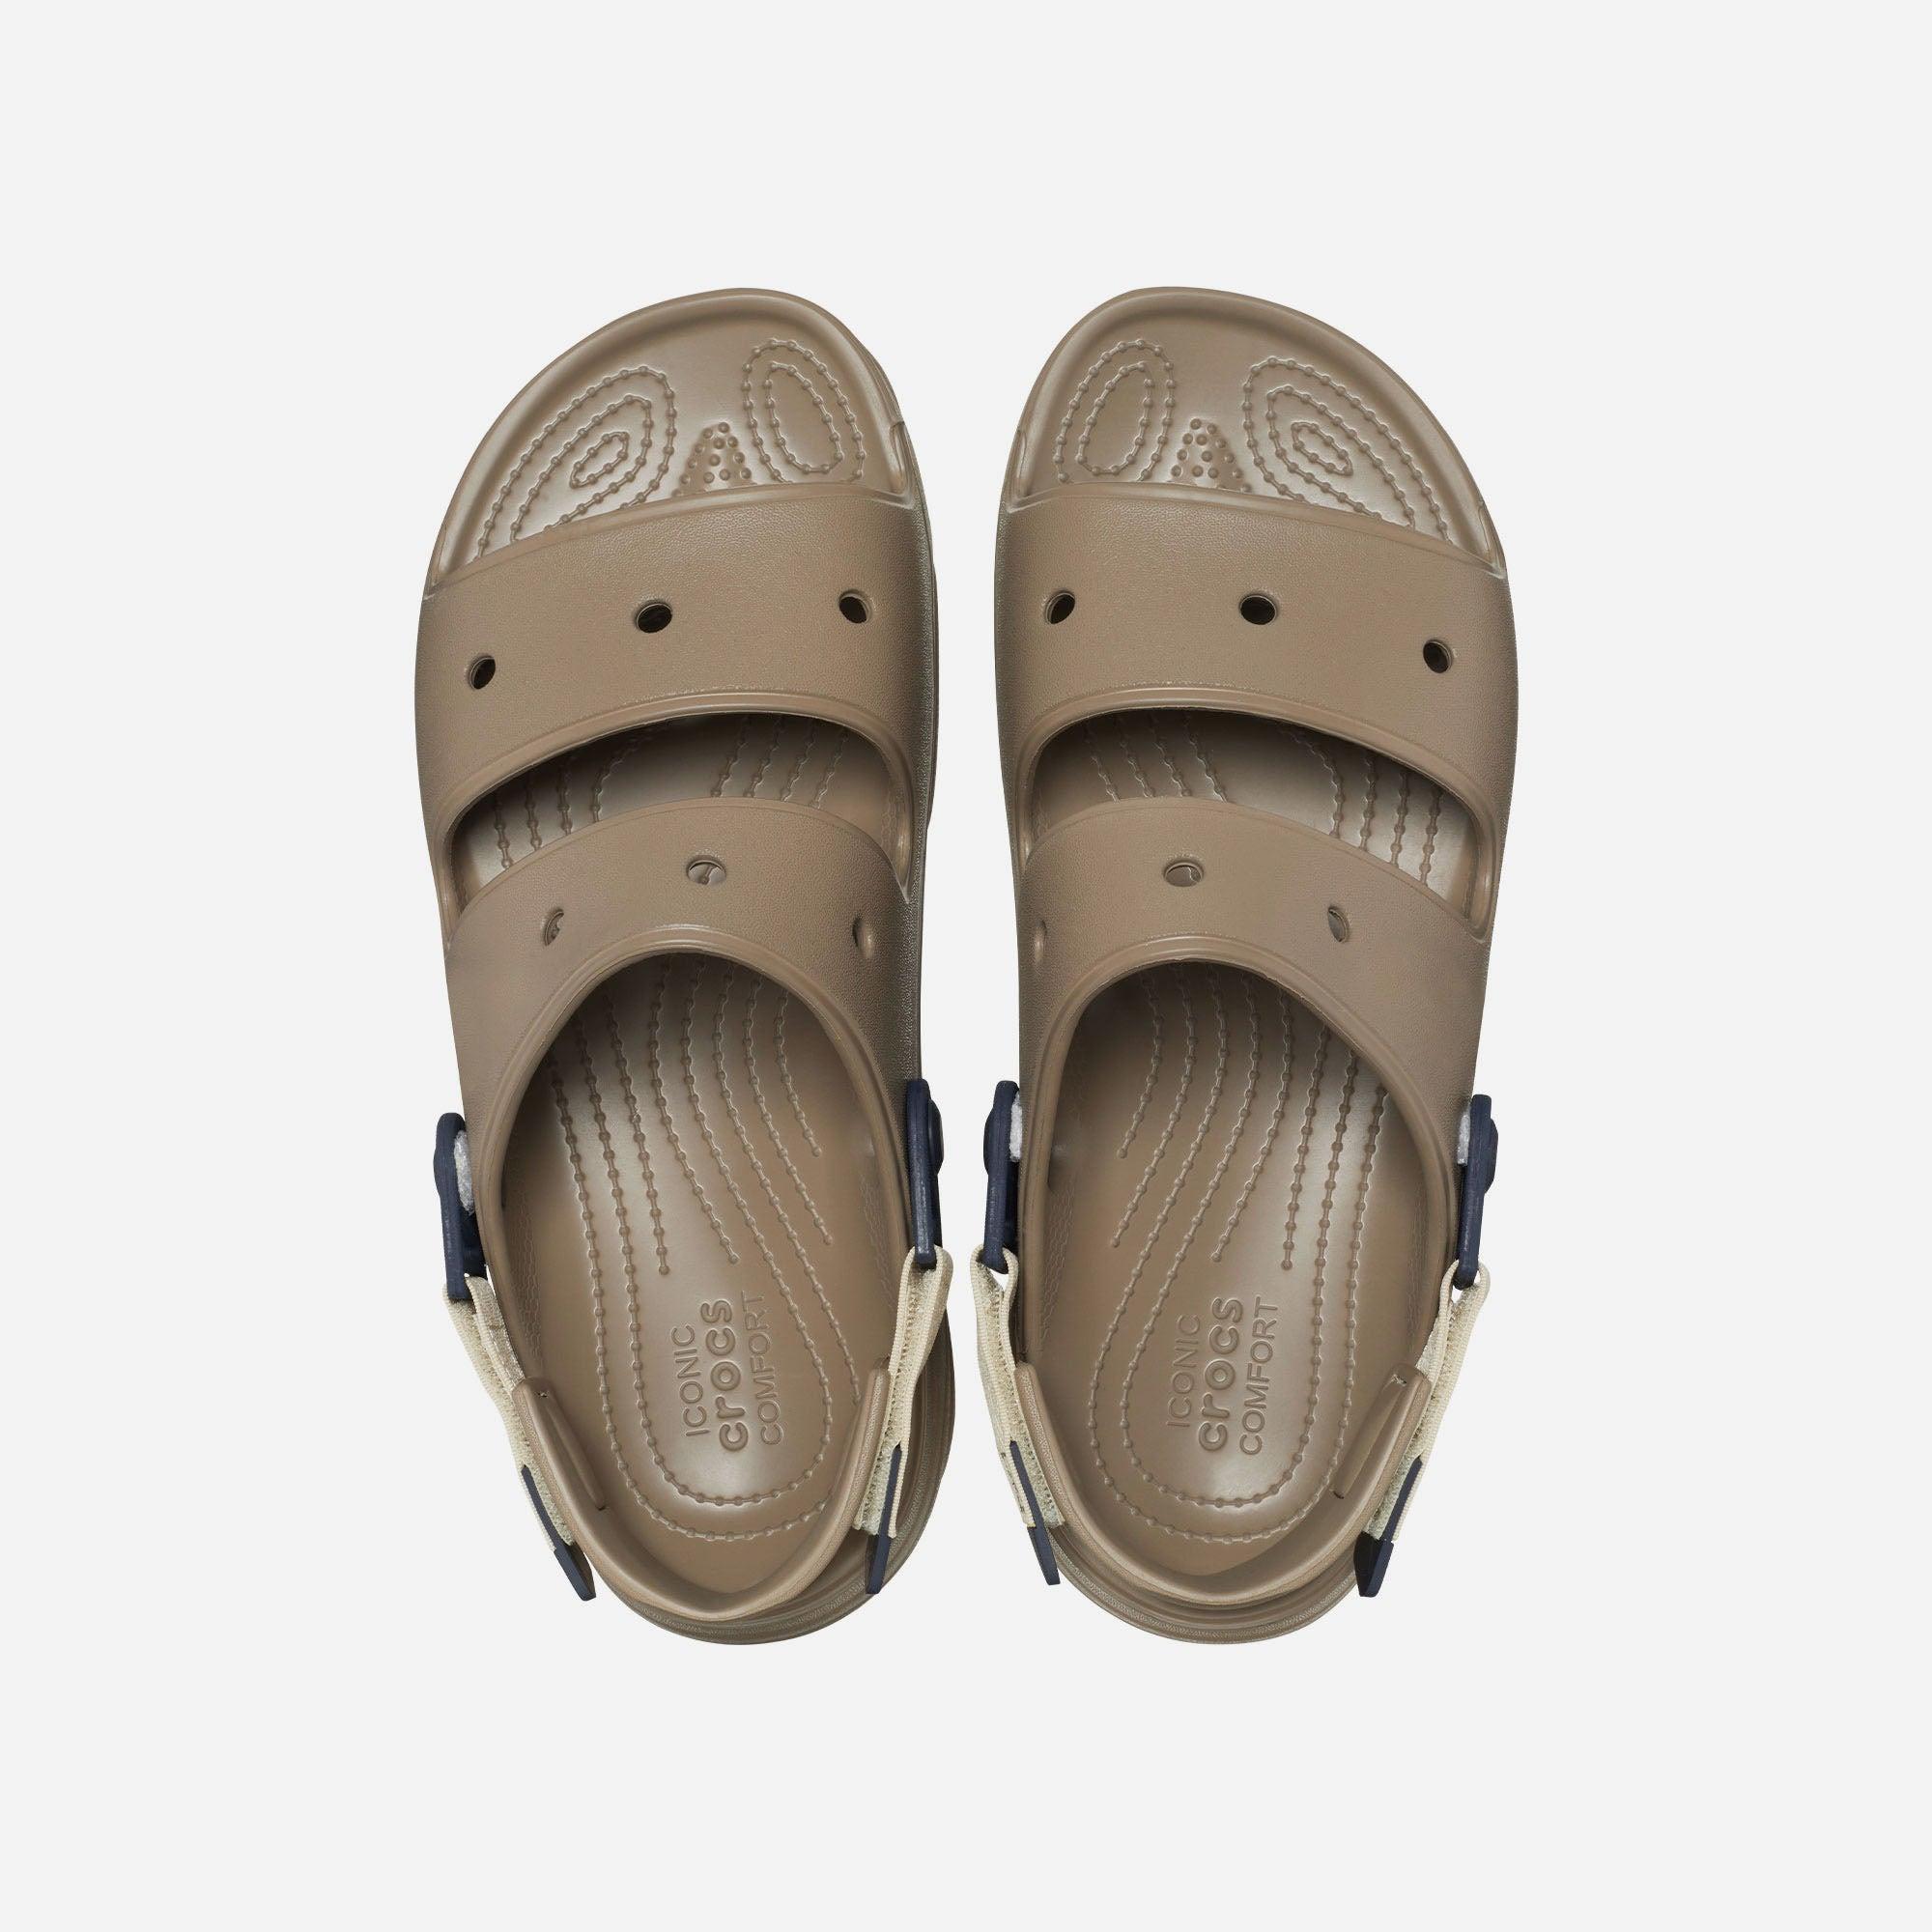 Giày sandal unisex Crocs Classic All-Terrain - 207711-2F9